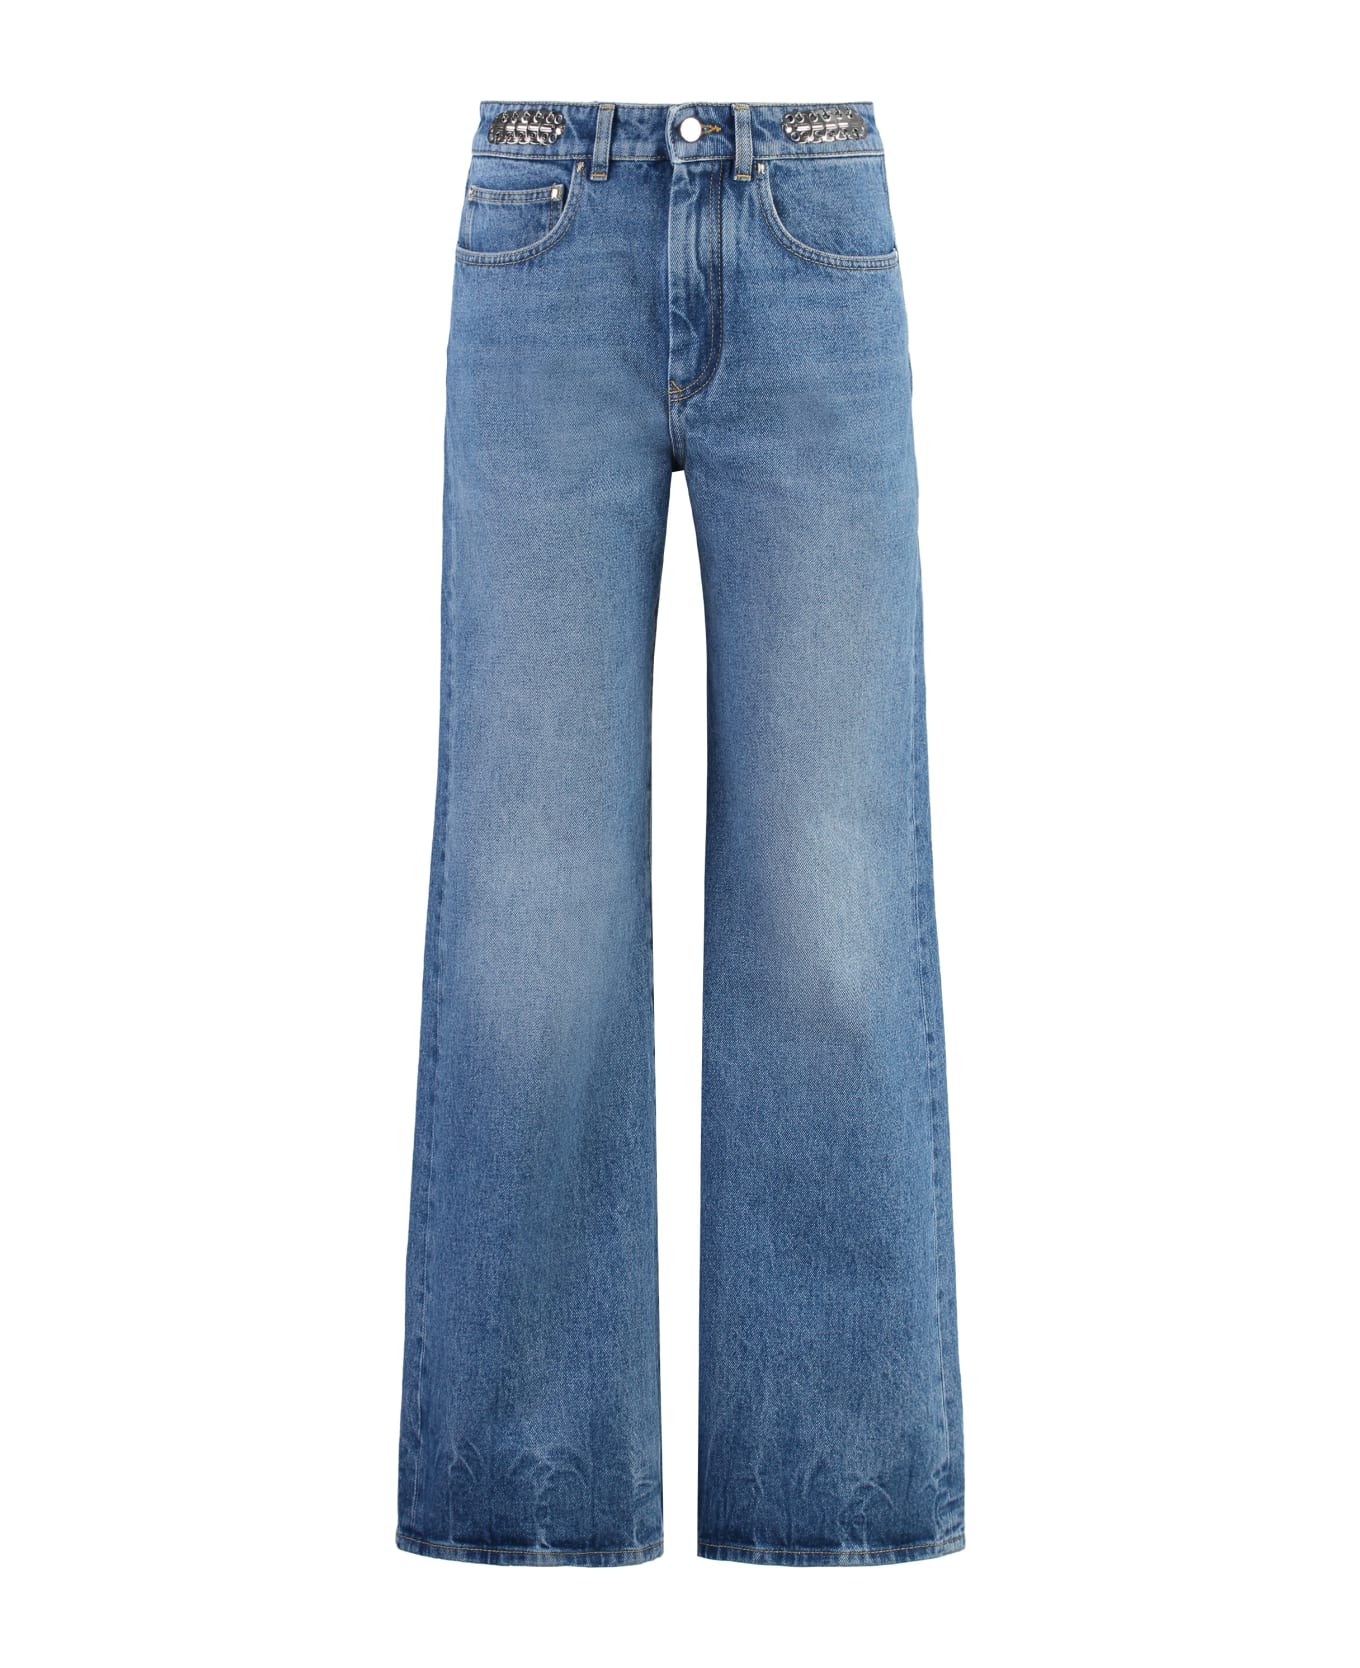 Paco Rabanne 5-pocket Straight-leg Jeans - Denim デニム